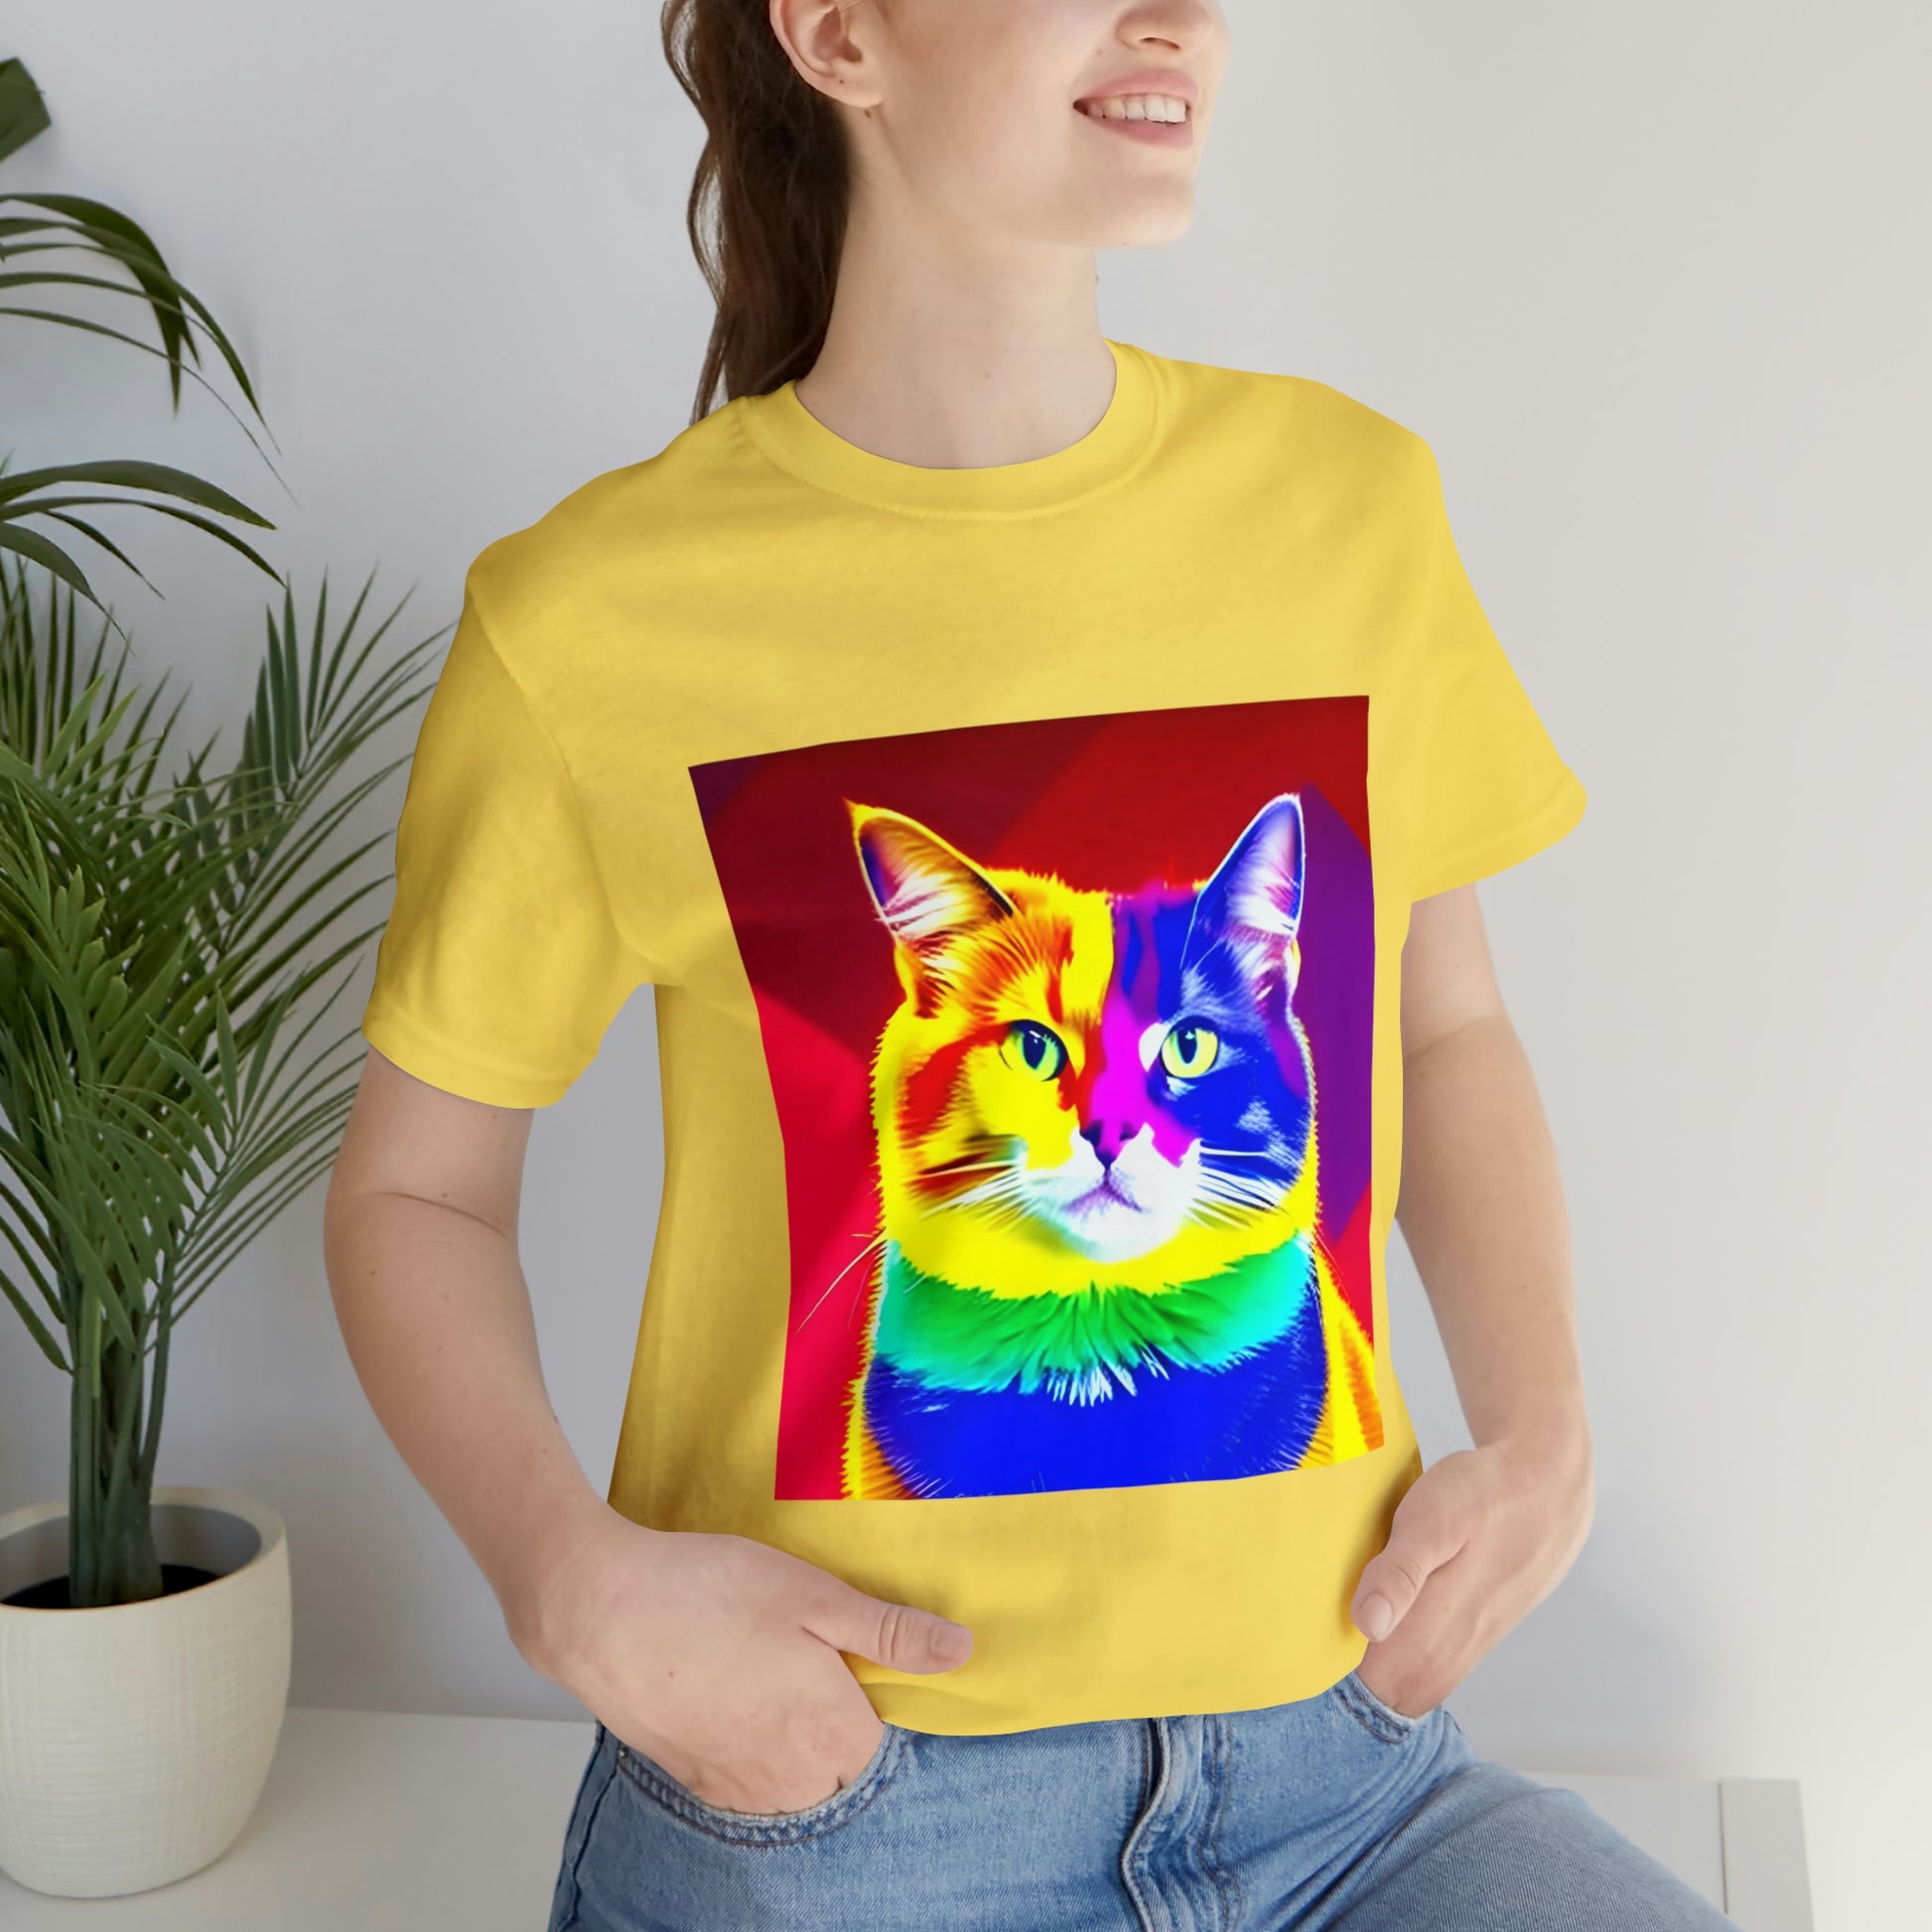 Rainbow Pride Cat T-shirt, Cat LGBTQ shirt, colorful cat shirt, cute Lgbt tee, funny kawaii cat tshirt, Purride cat shirt, cat lover gift